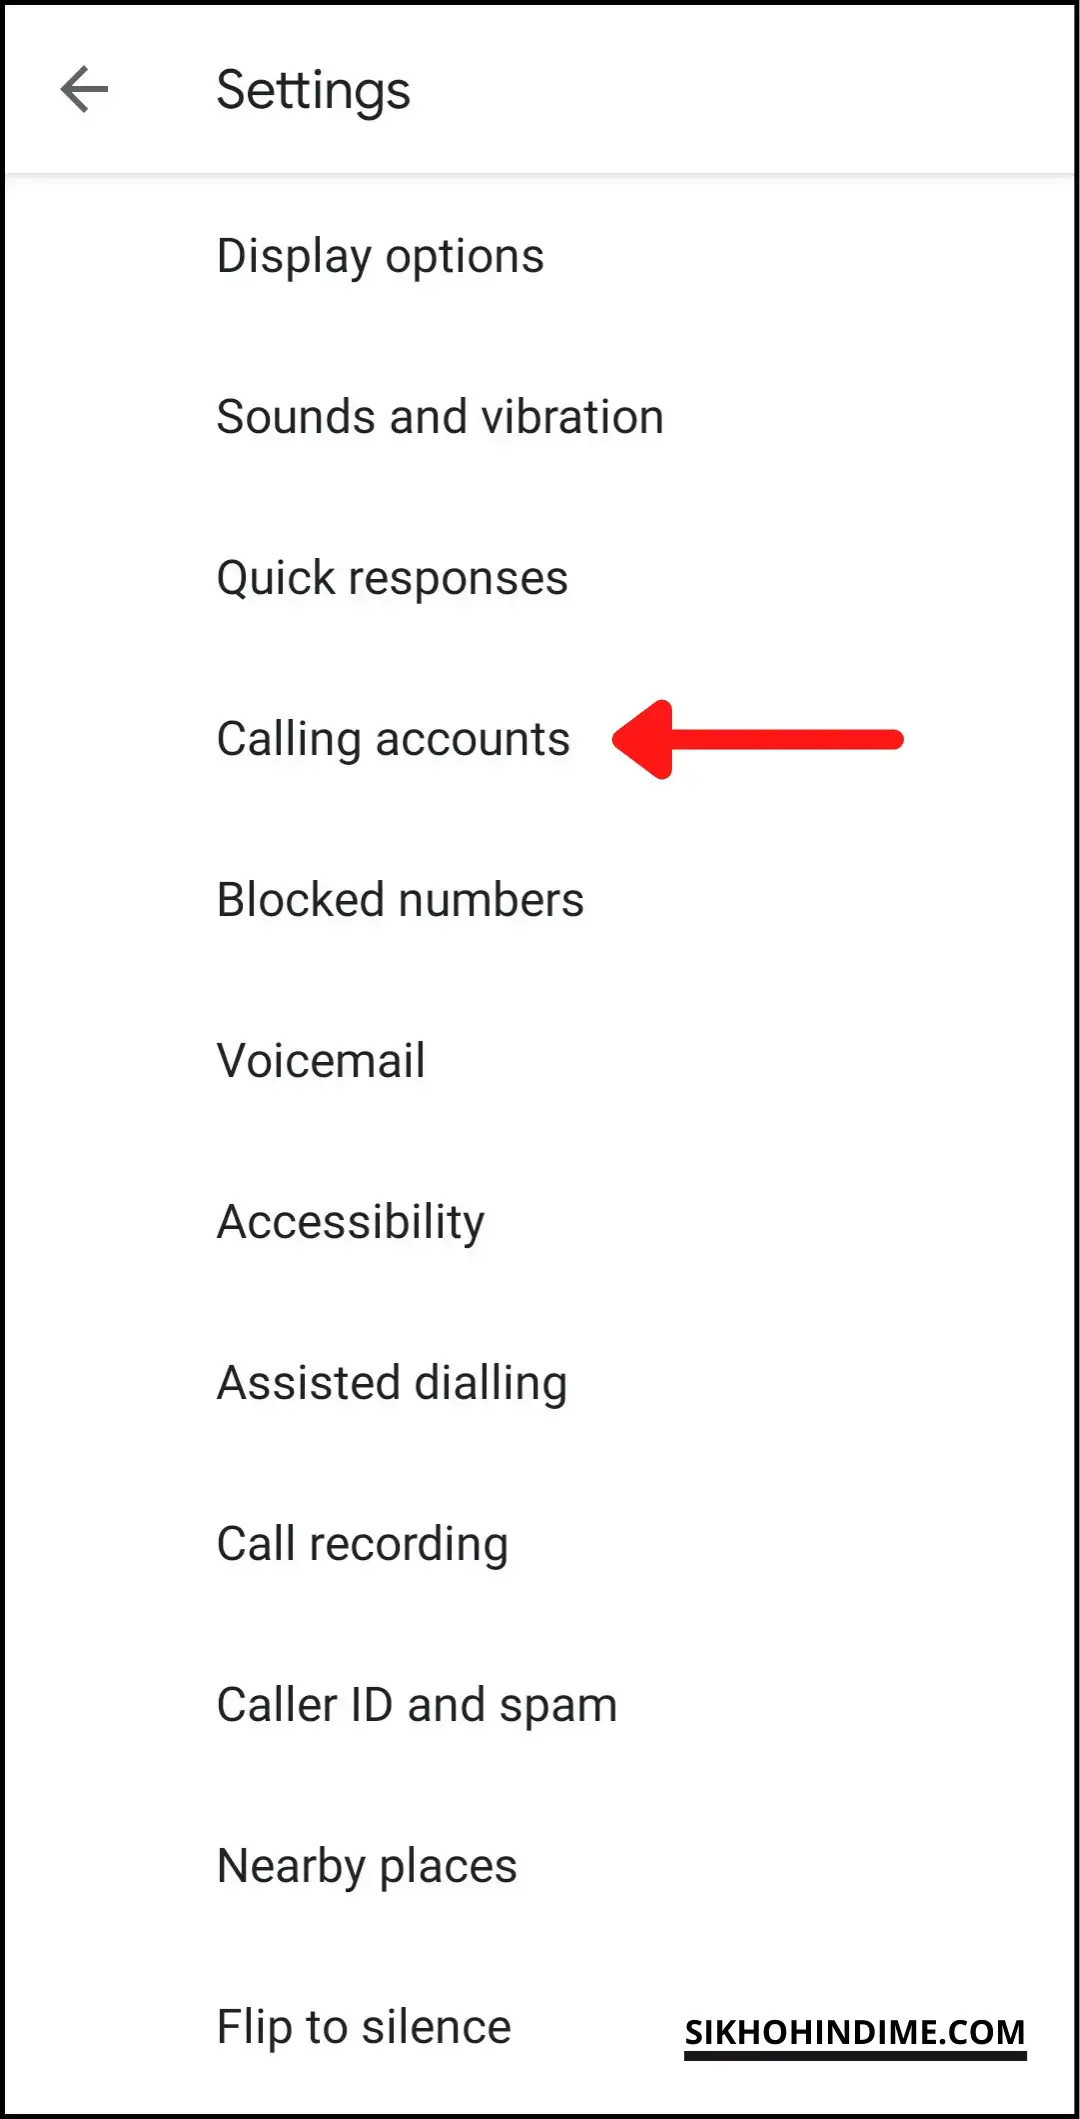 Click on calling accounts